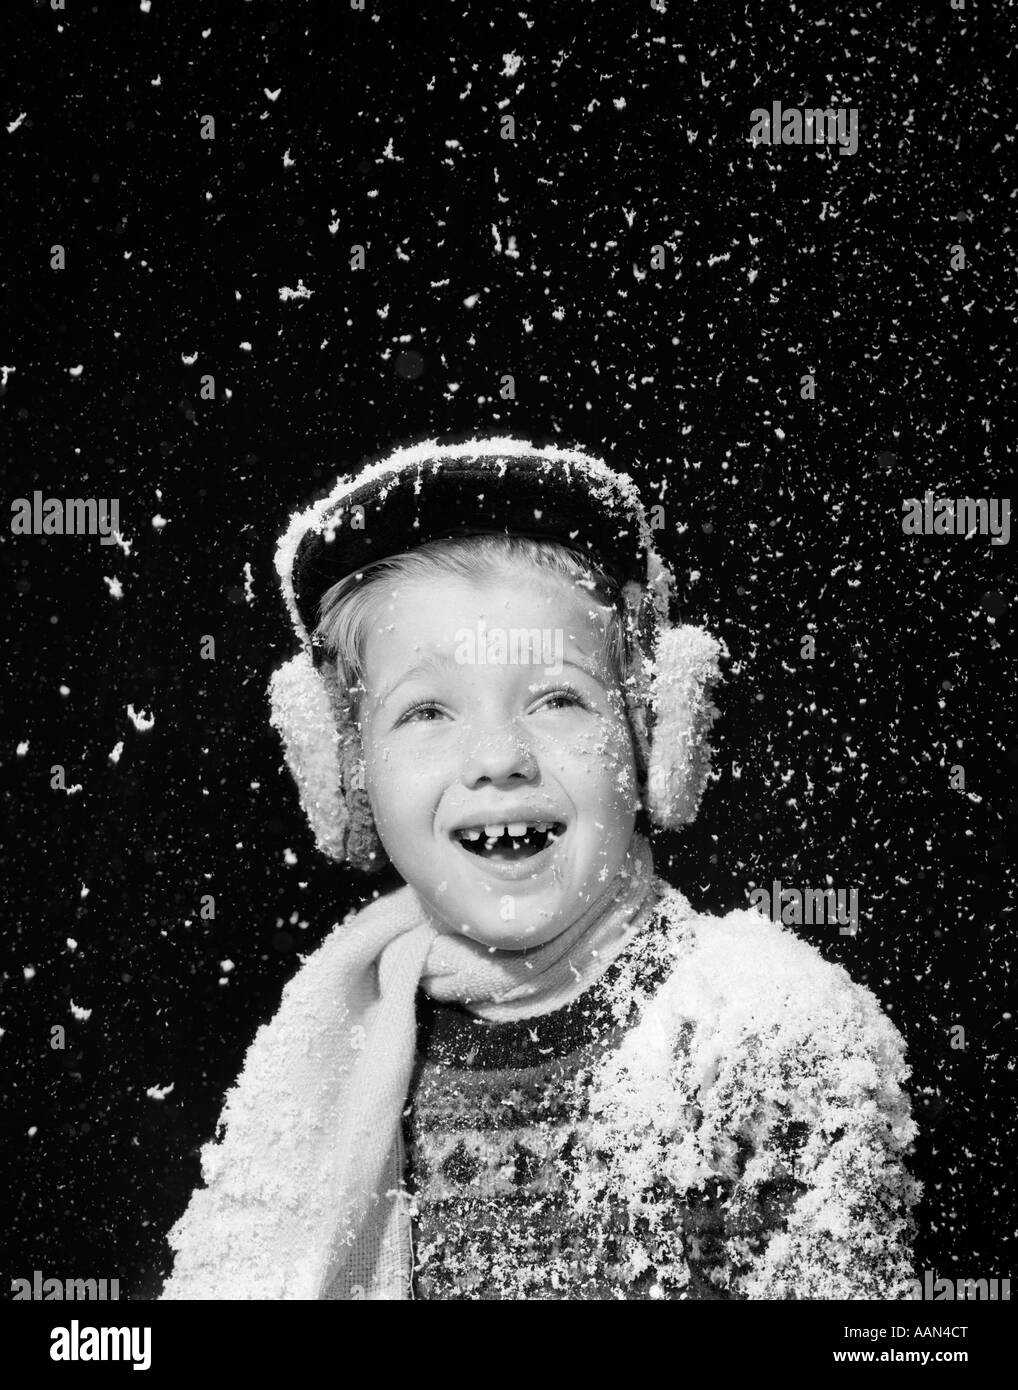 Fake snow Black and White Stock Photos & Images - Alamy